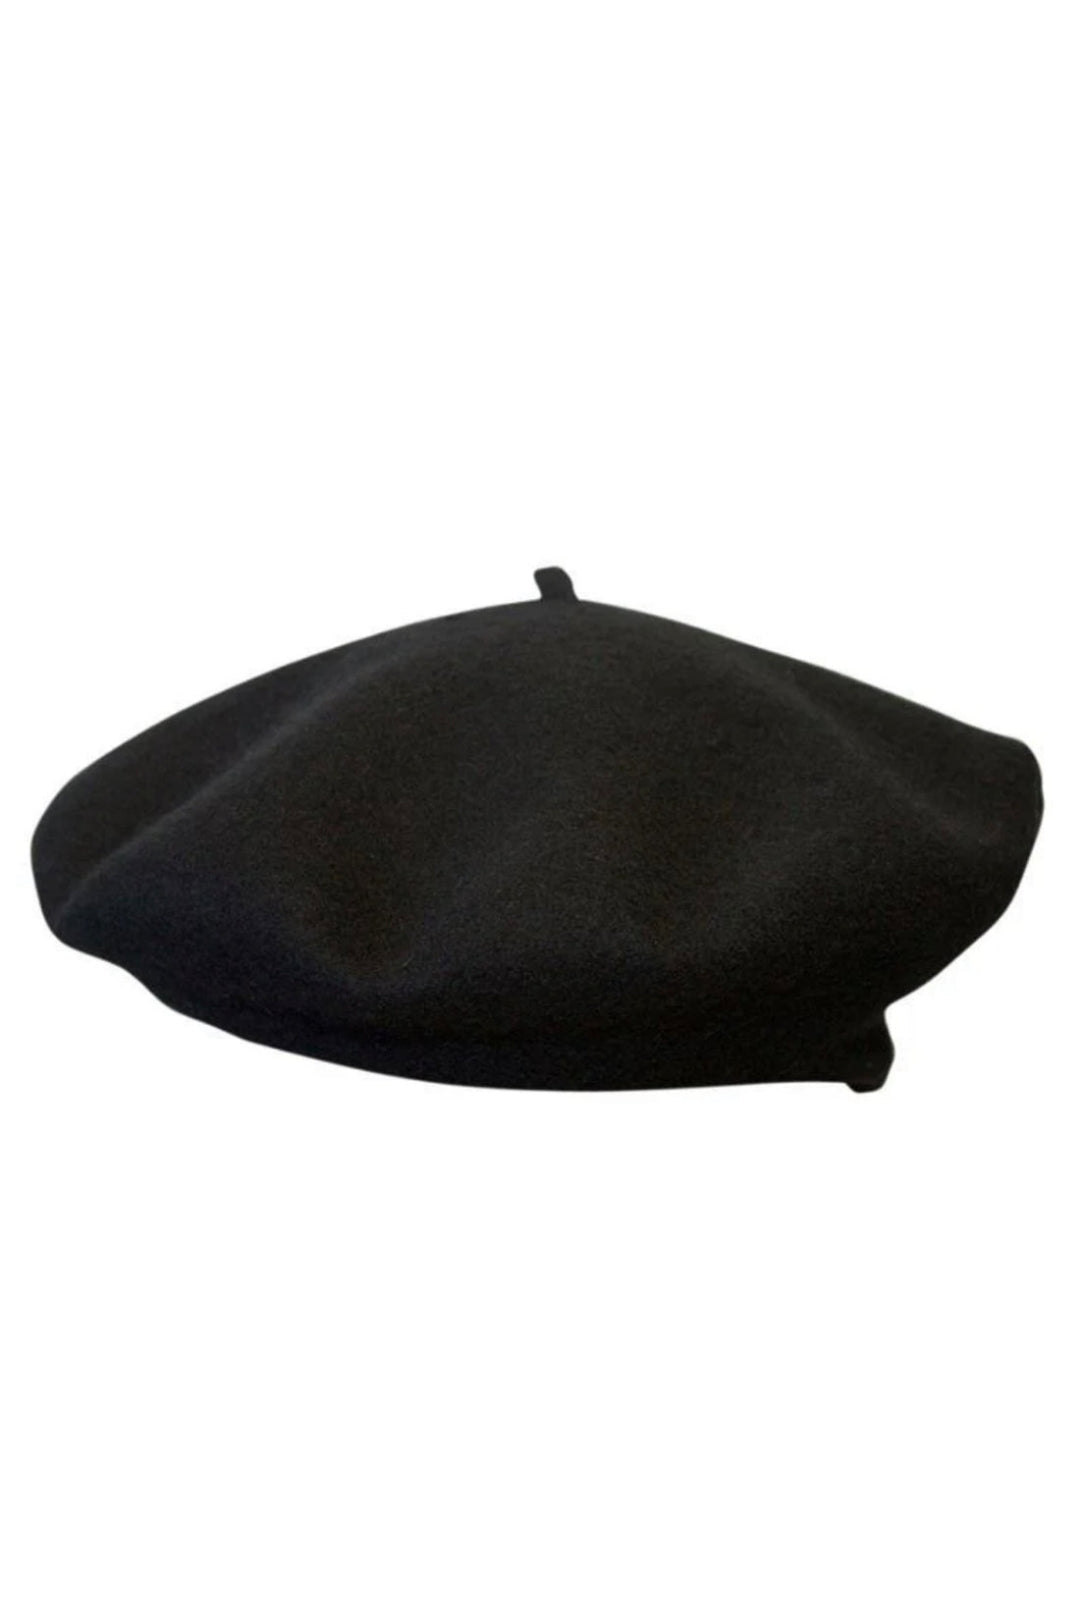 French Kiss Beret - Black Beret Hat